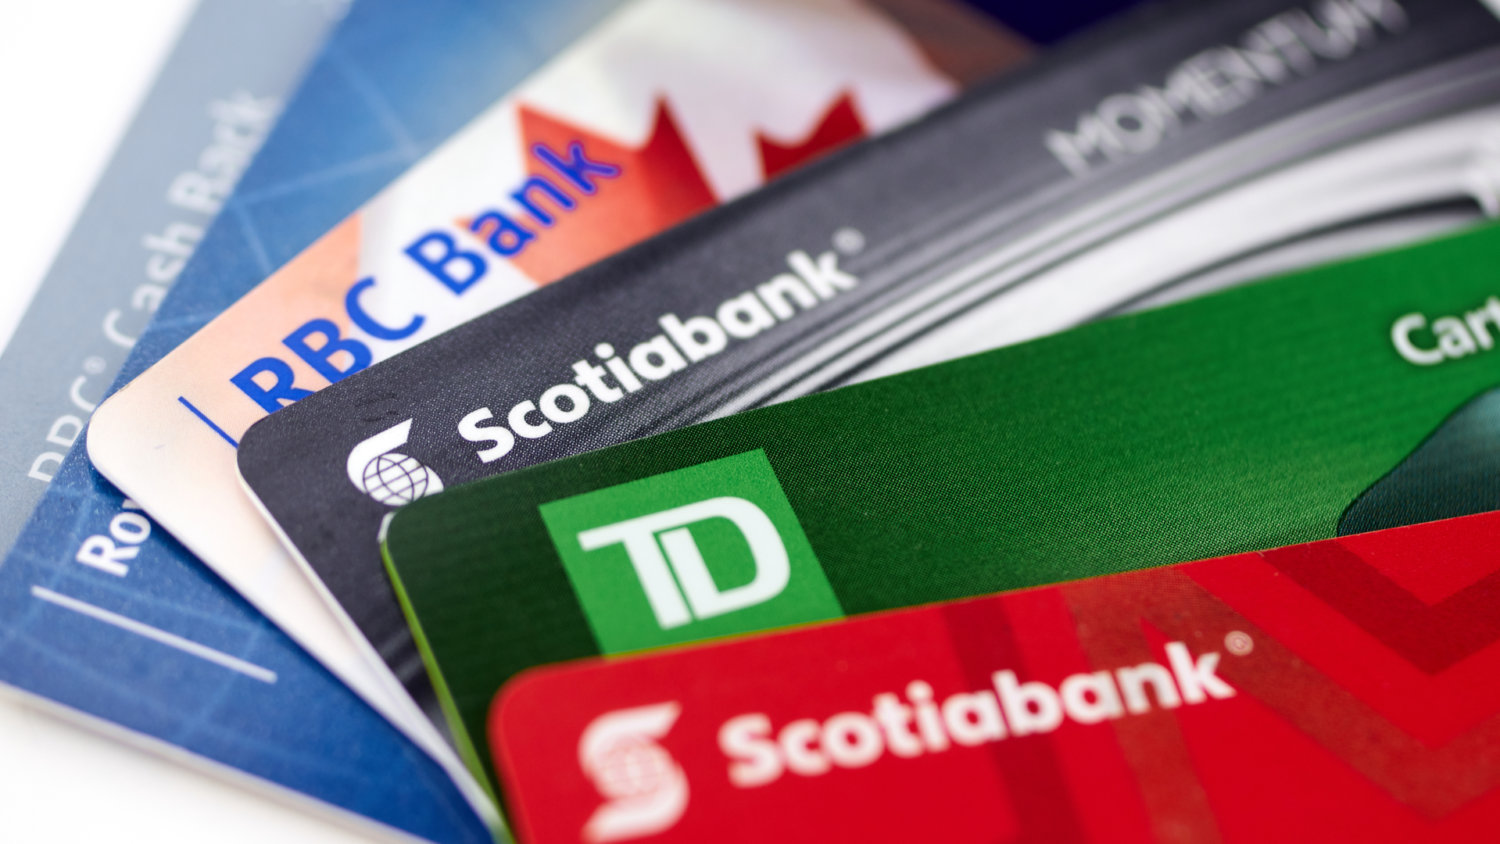 Canadianbankdebitcards